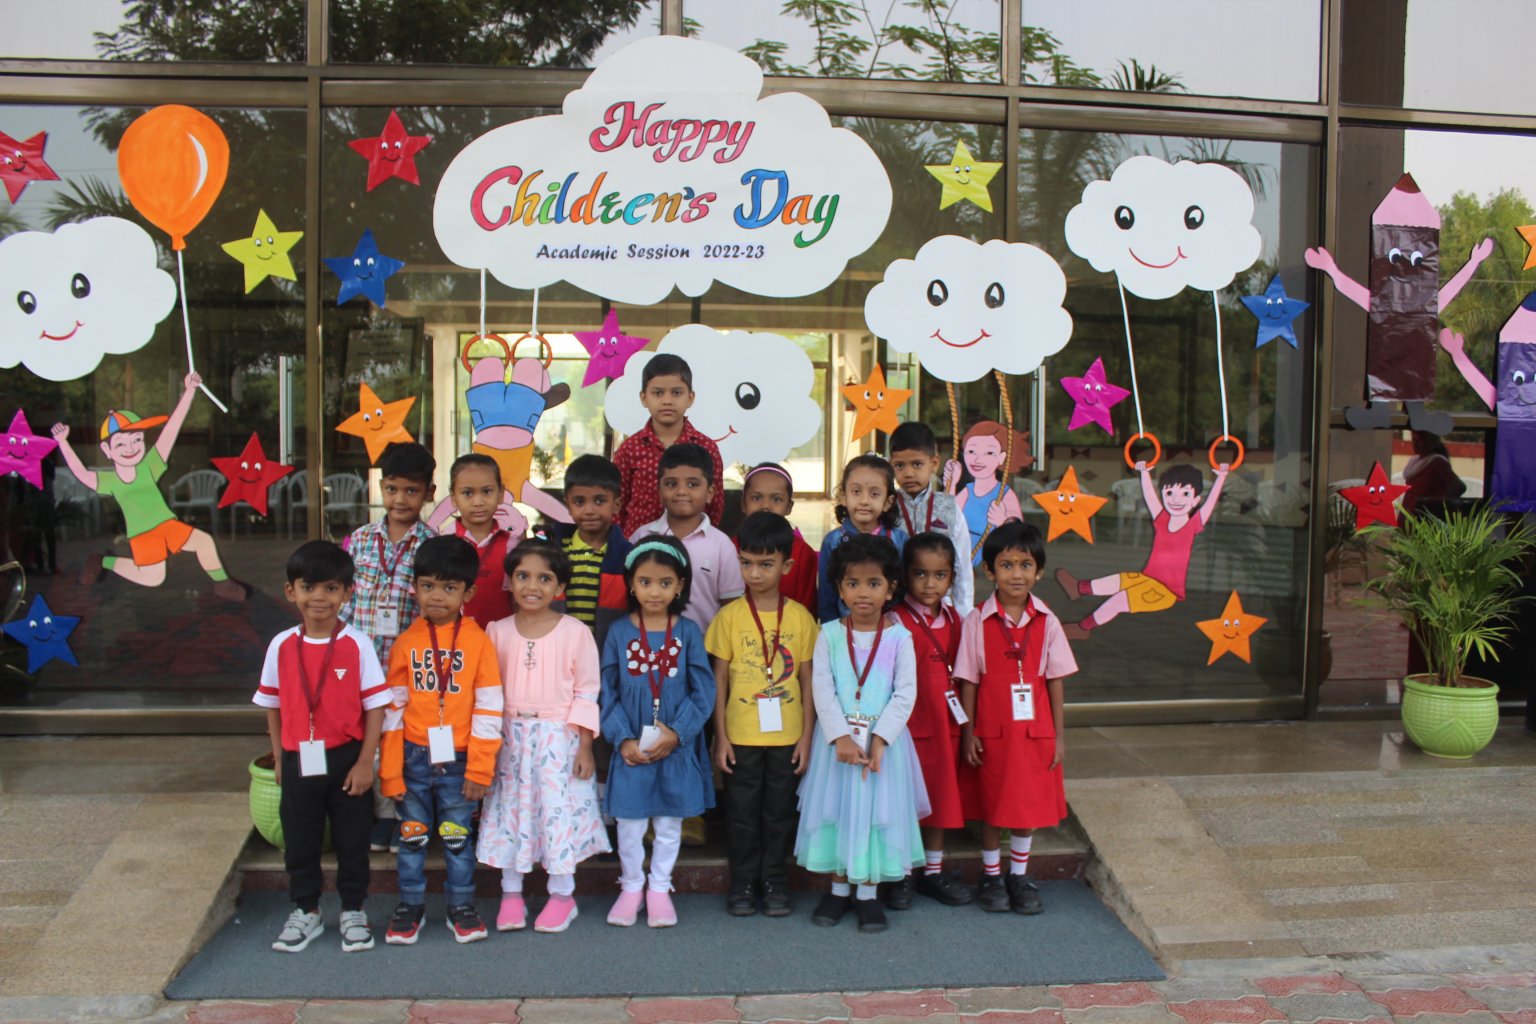 Children's Day Celebration